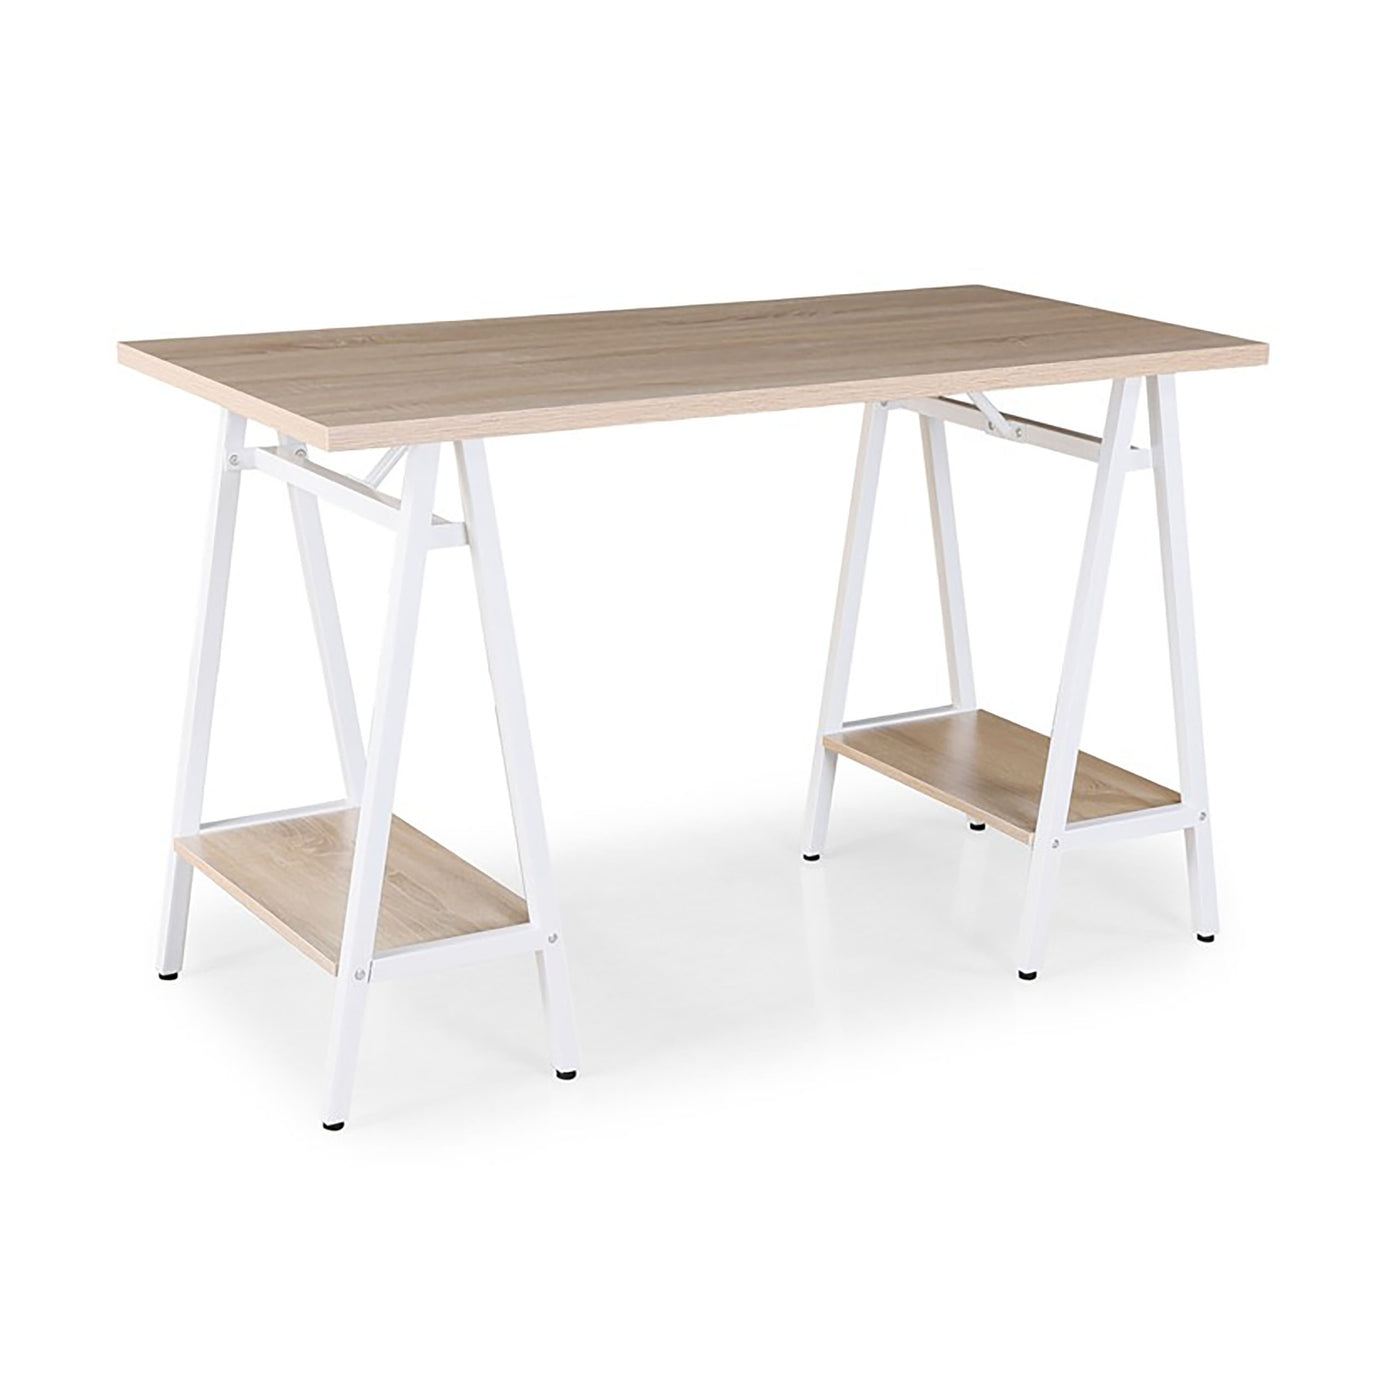 Pella Home Office Workstation | Oak Wood Home Office Desk | Home Office Furniture | Home Furnishings | Wooden Desk with White Frame